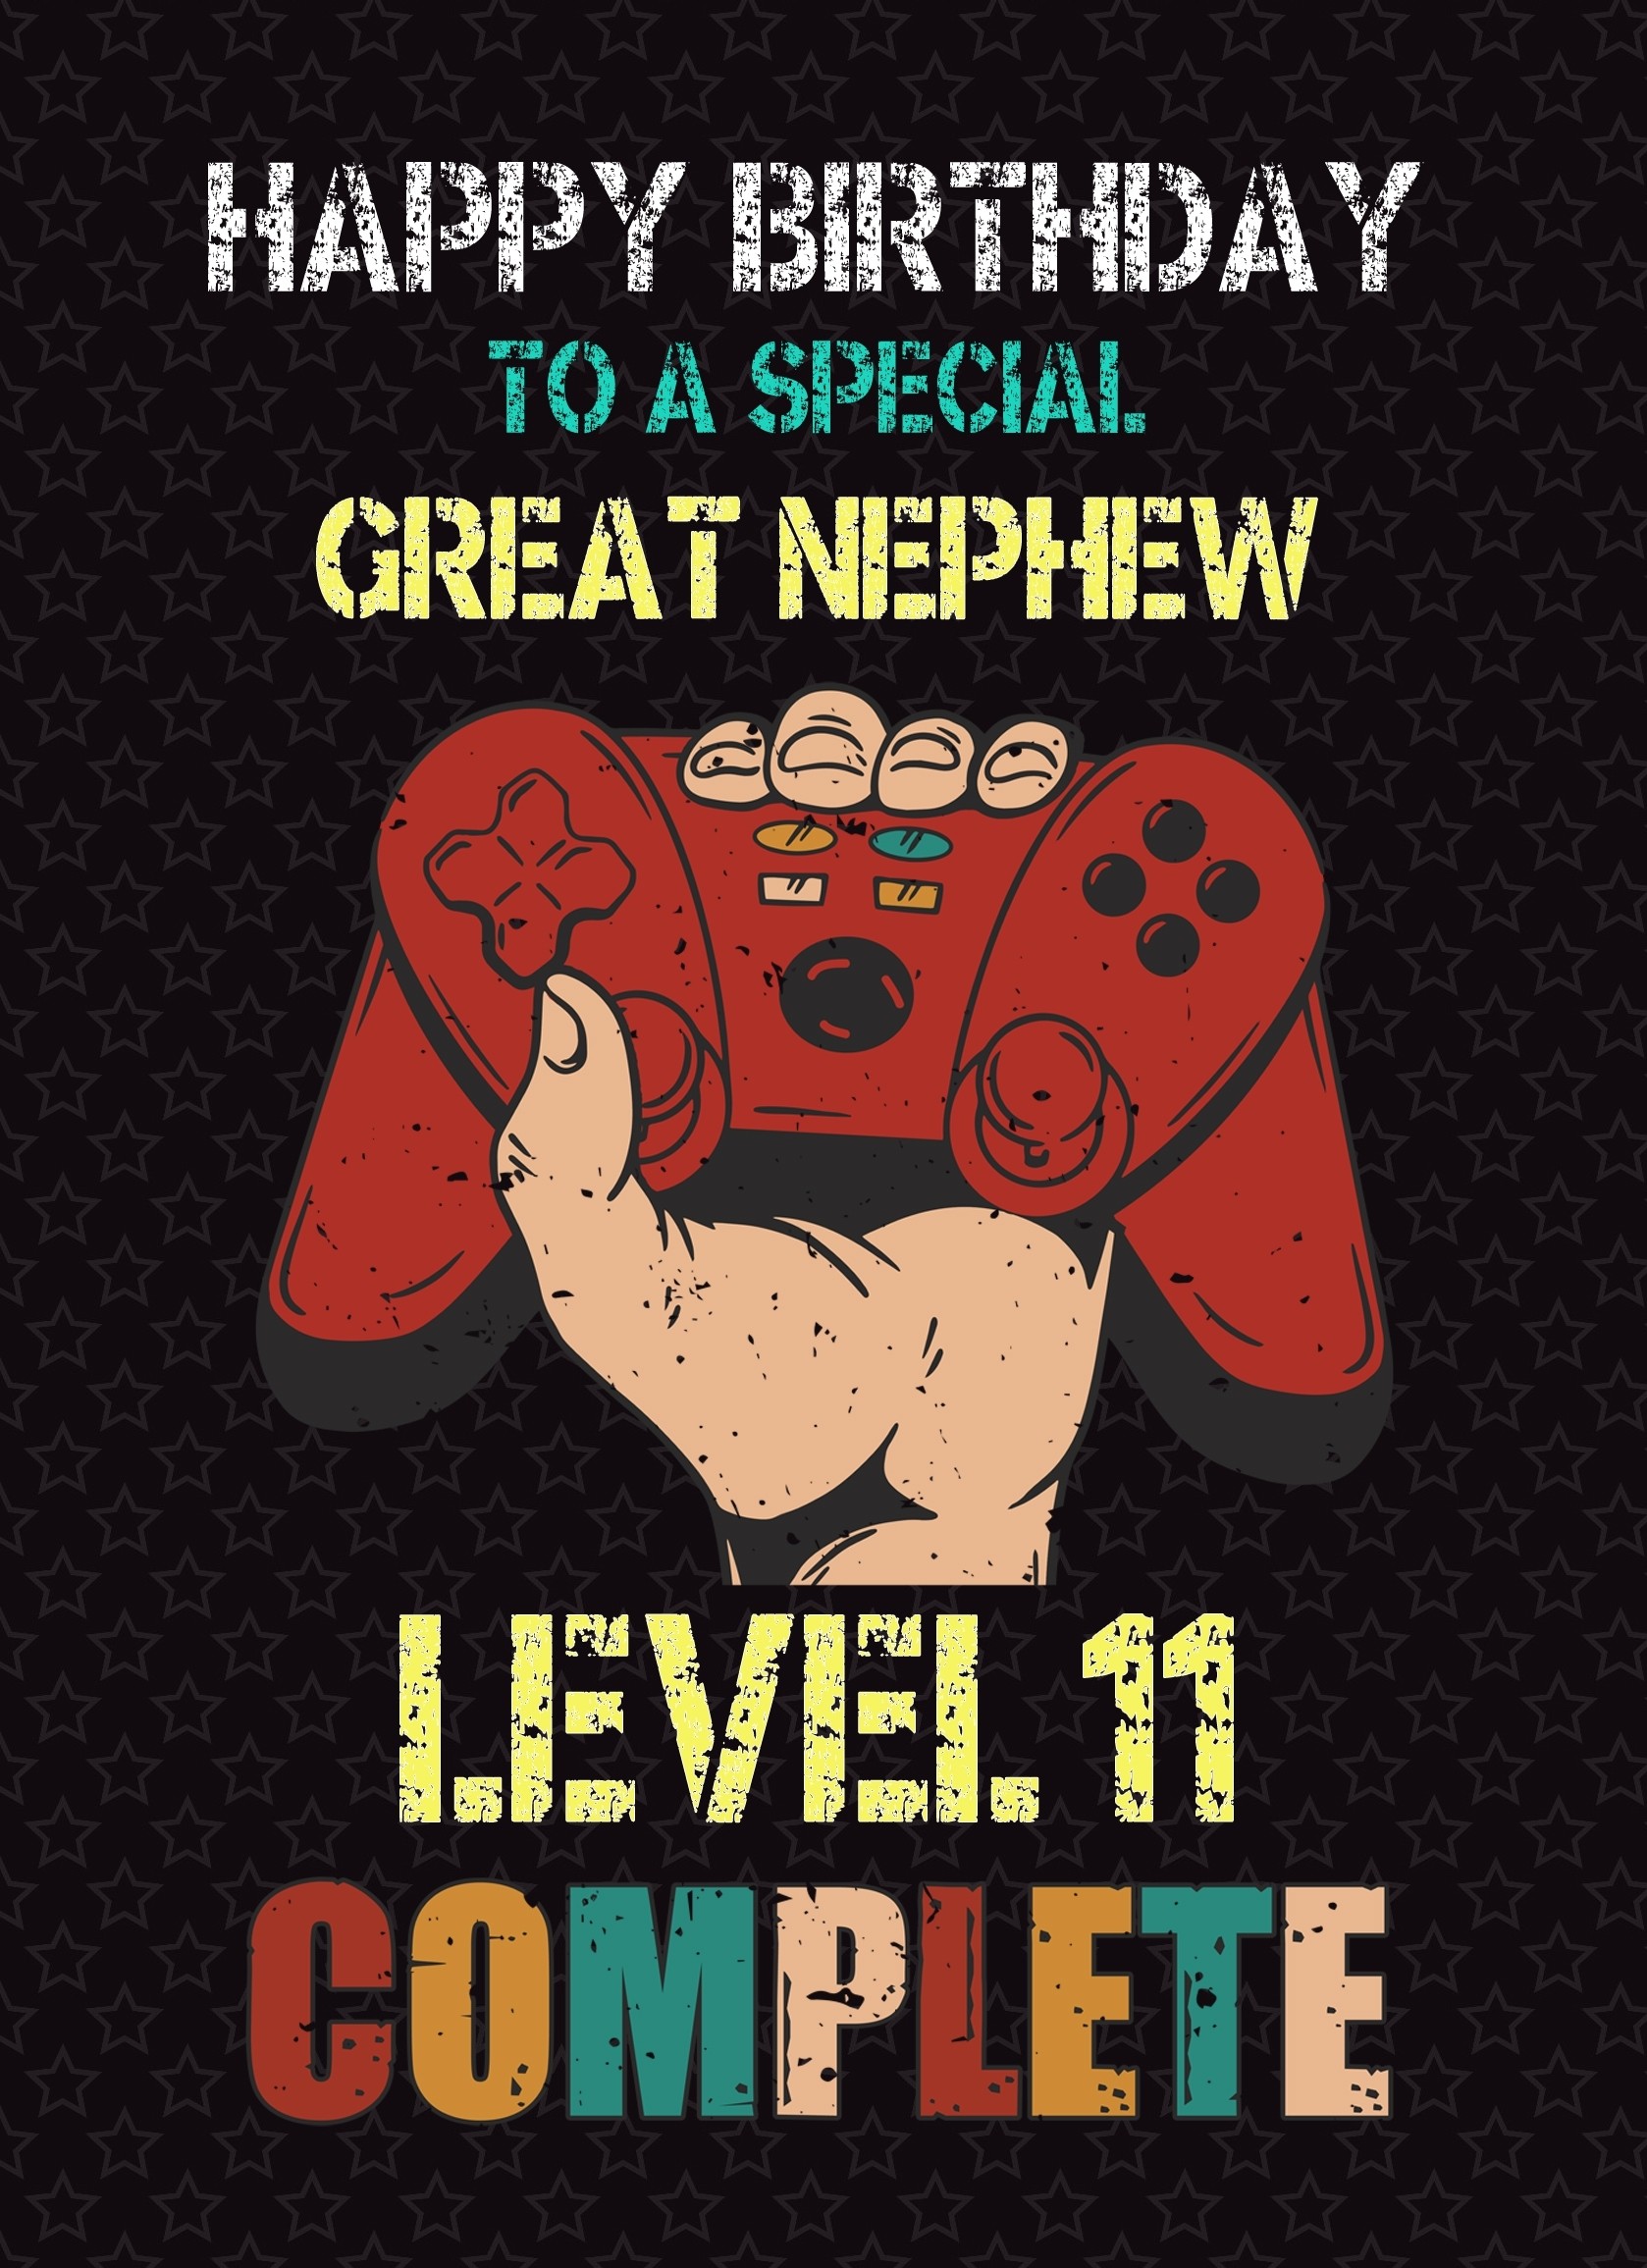 Great Nephew 12th Birthday Card (Gamer, Design 3)